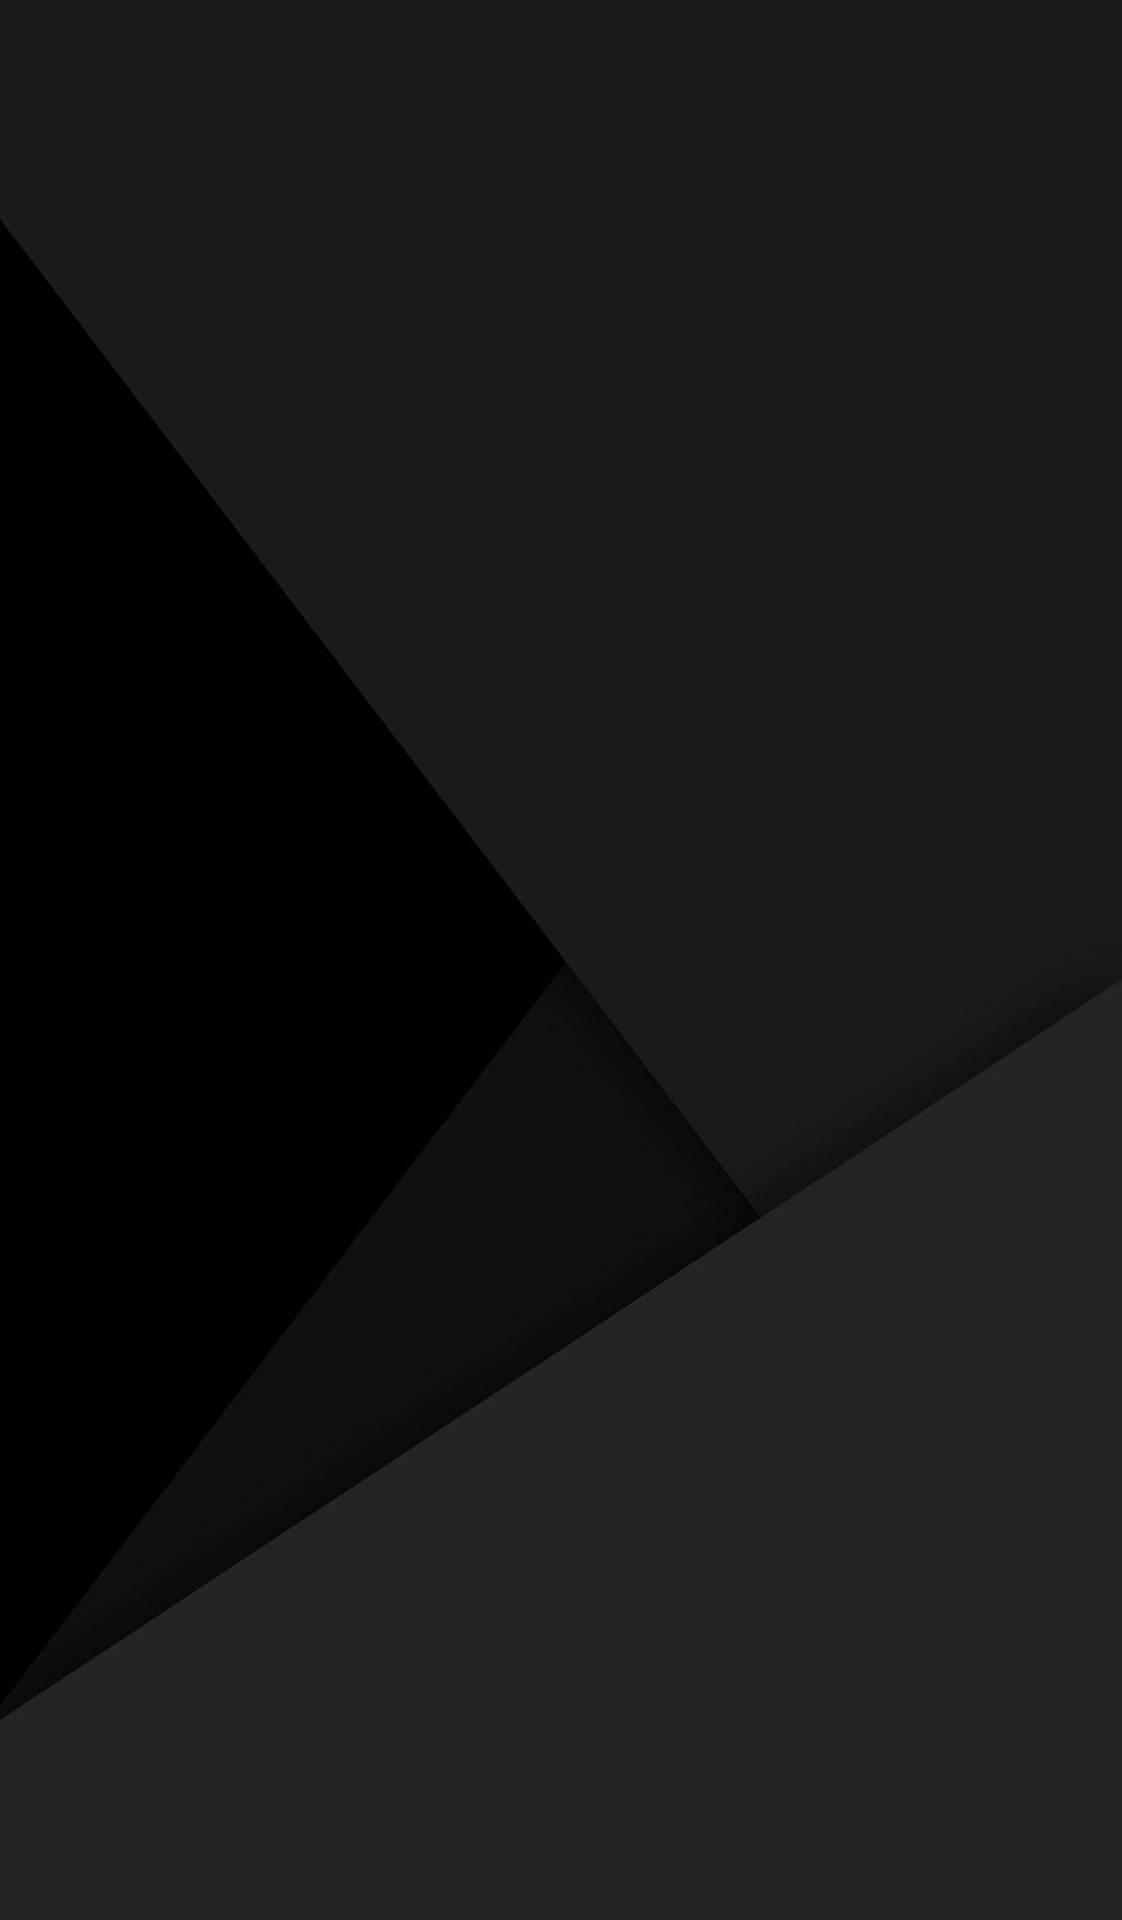 Solid Black 4k Geometric Shapes Background